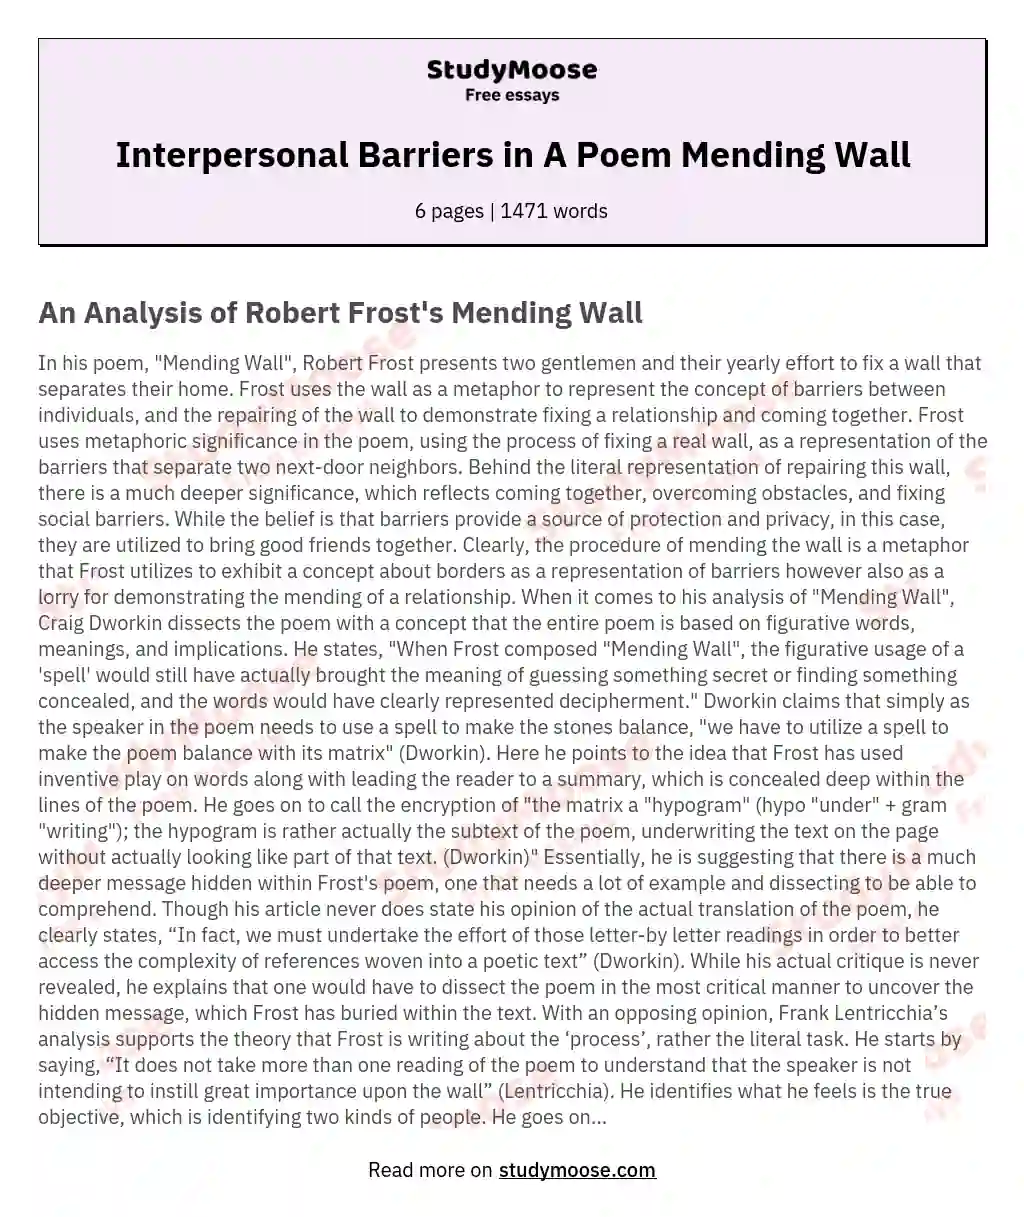 Interpersonal Barriers in A Poem Mending Wall